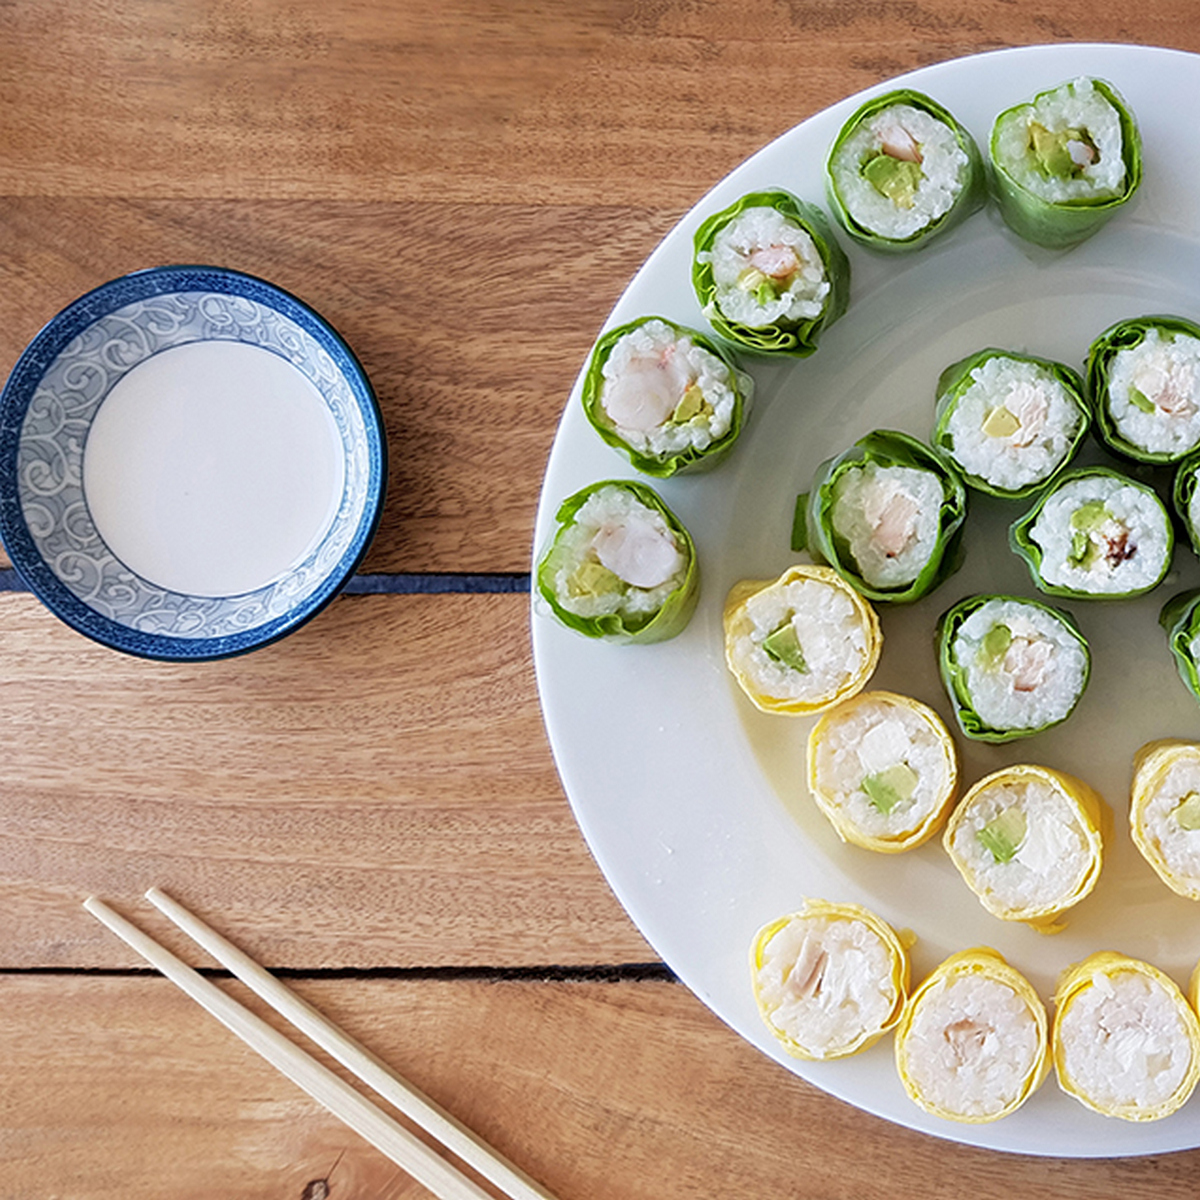 cookut coffret-sushi-maki-faciles ustensile de cuisine une idee cadeau chez ugo et lea (18)